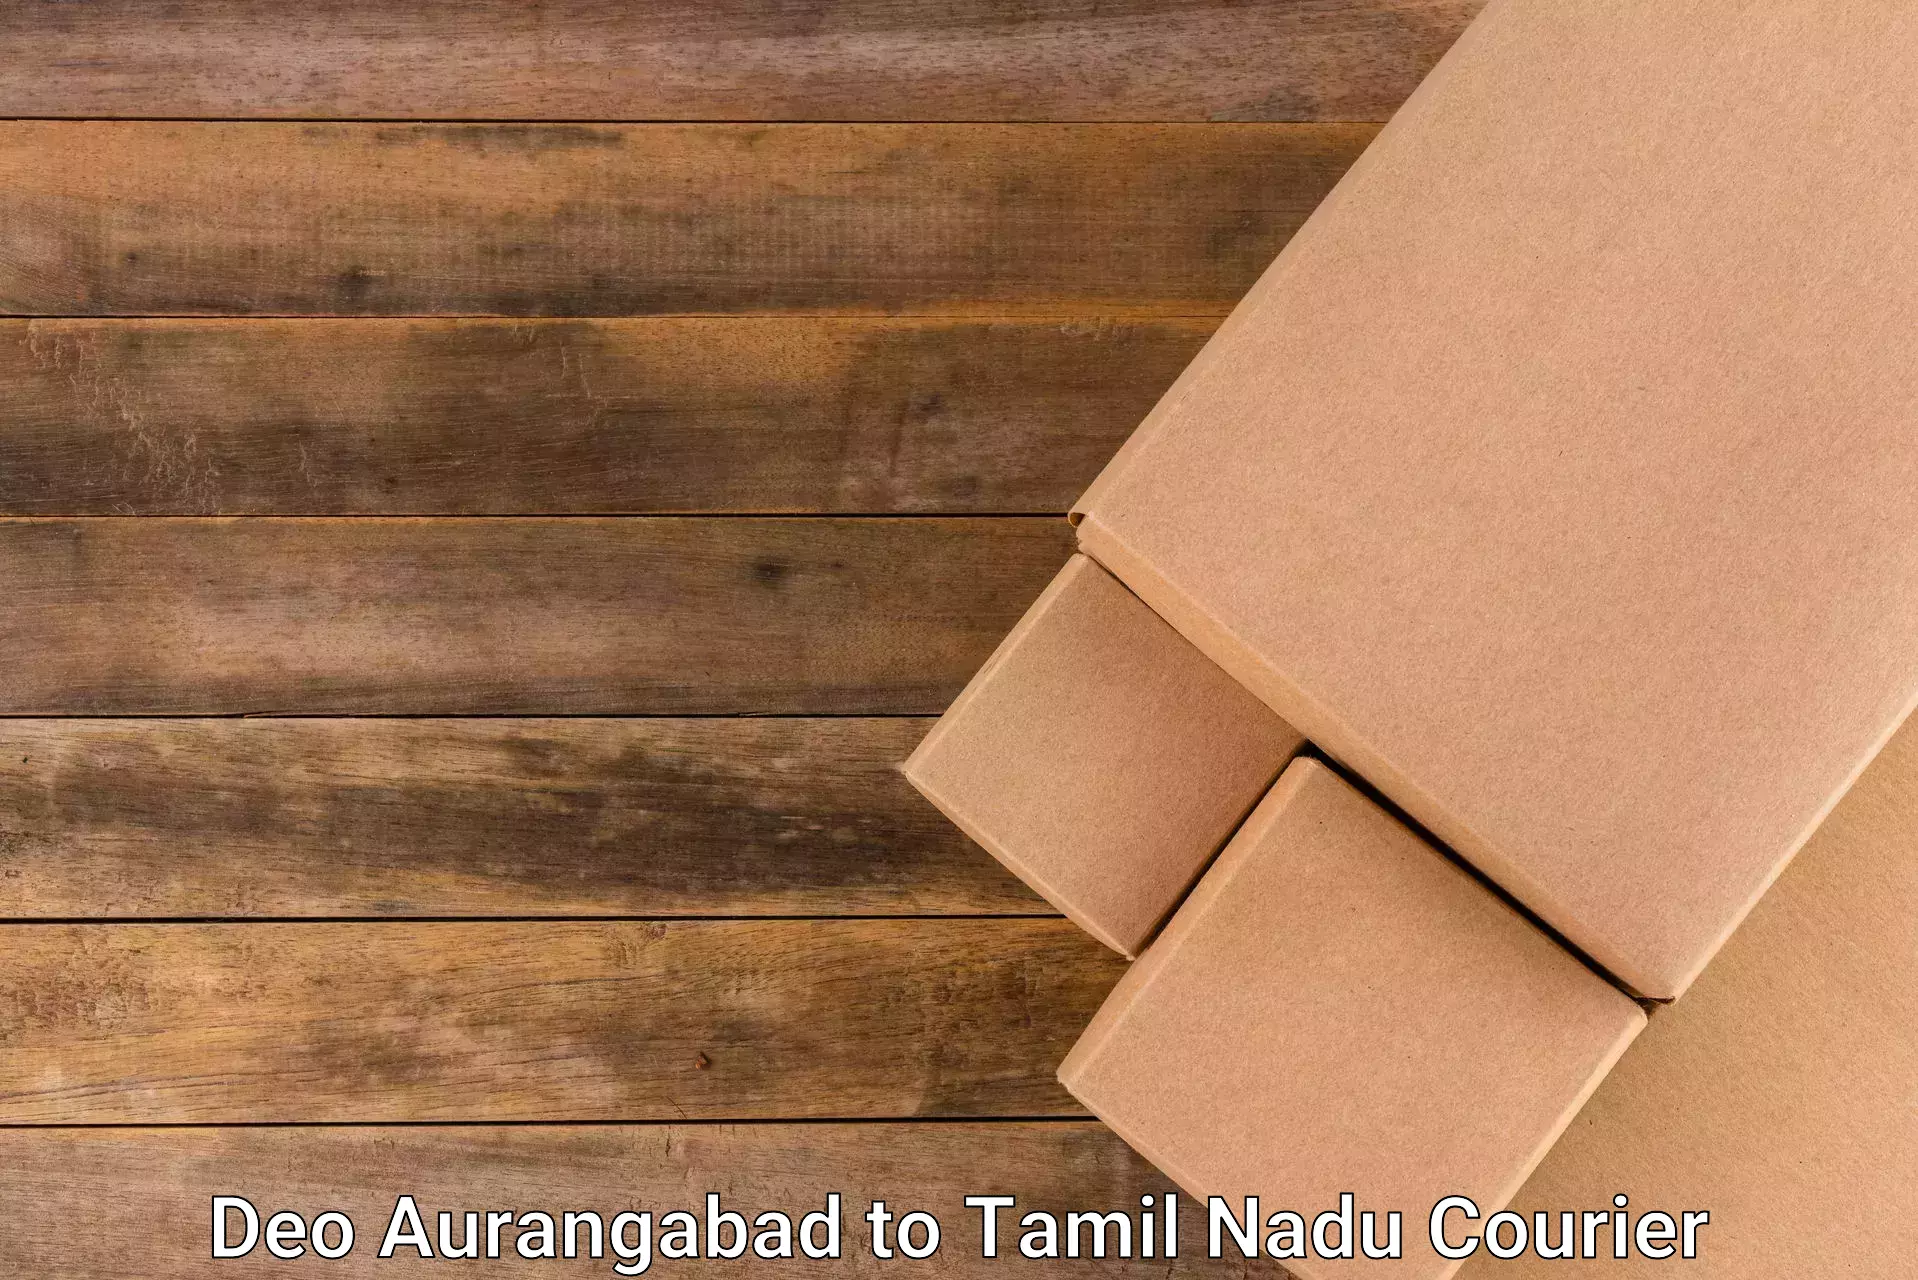 Efficient order fulfillment in Deo Aurangabad to Tamil Nadu